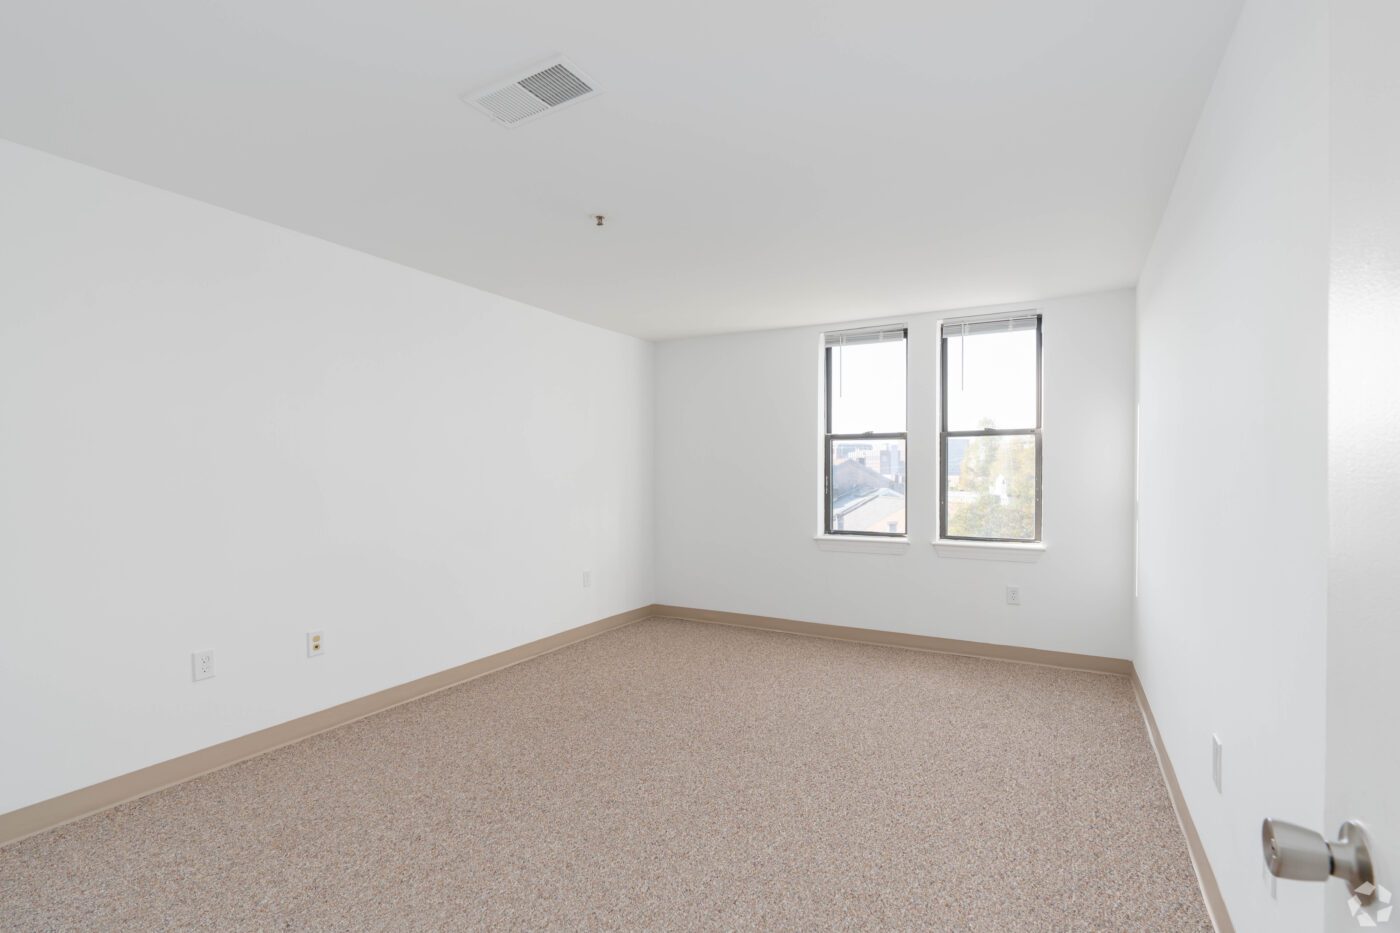 Apartment-Interior-Bedroom-3-scaled